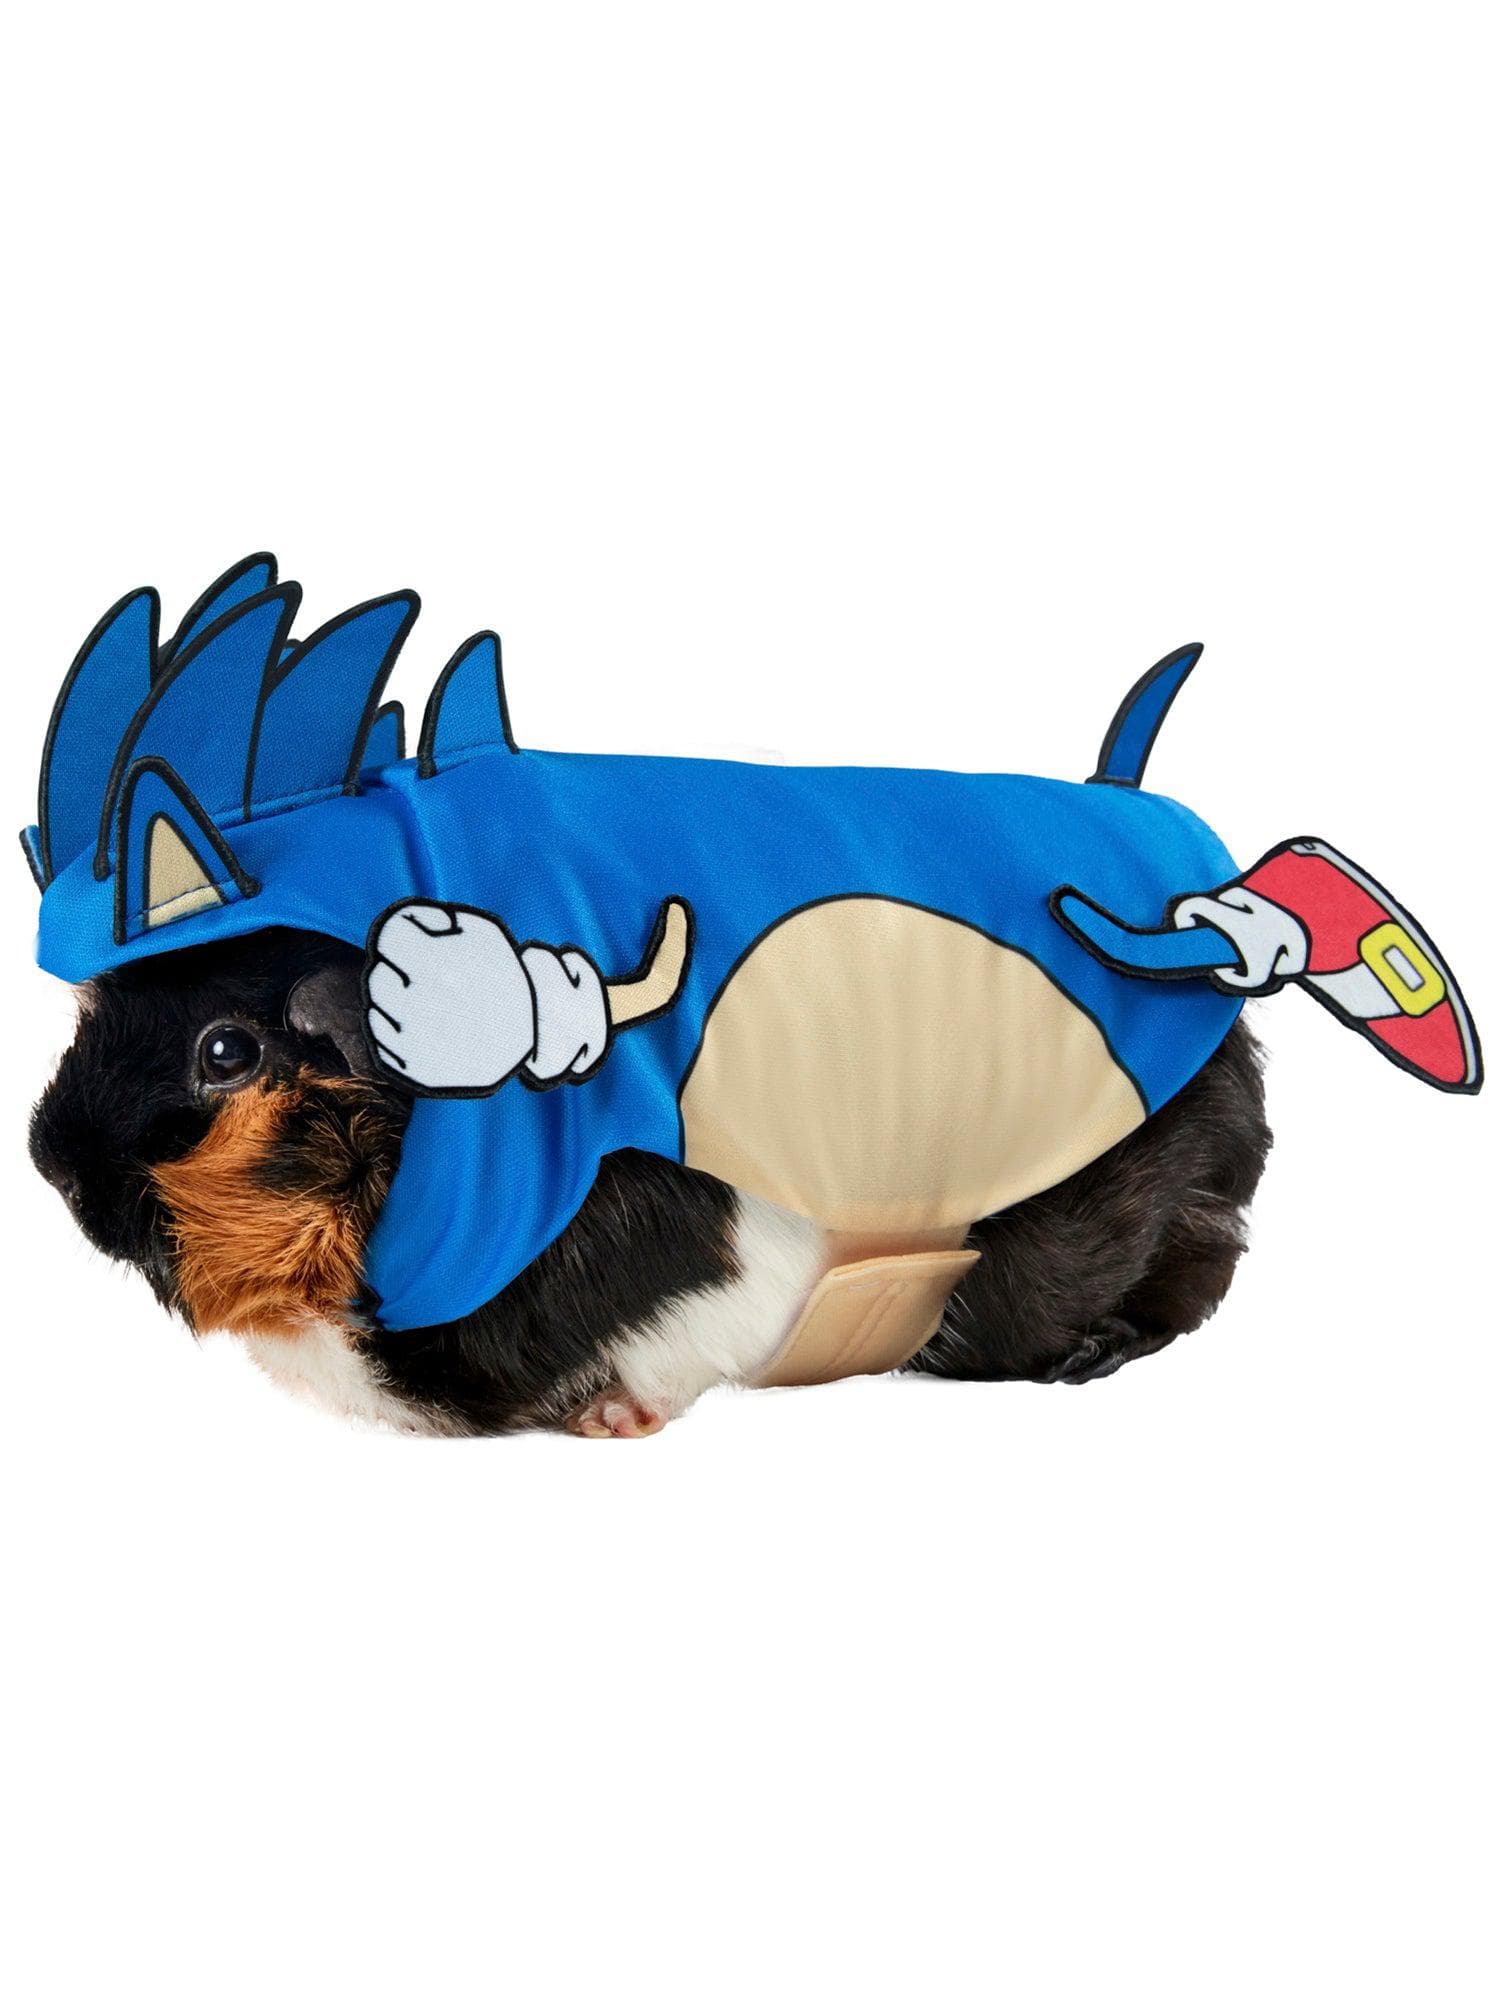 Sonic Small Pet Costume - costumes.com